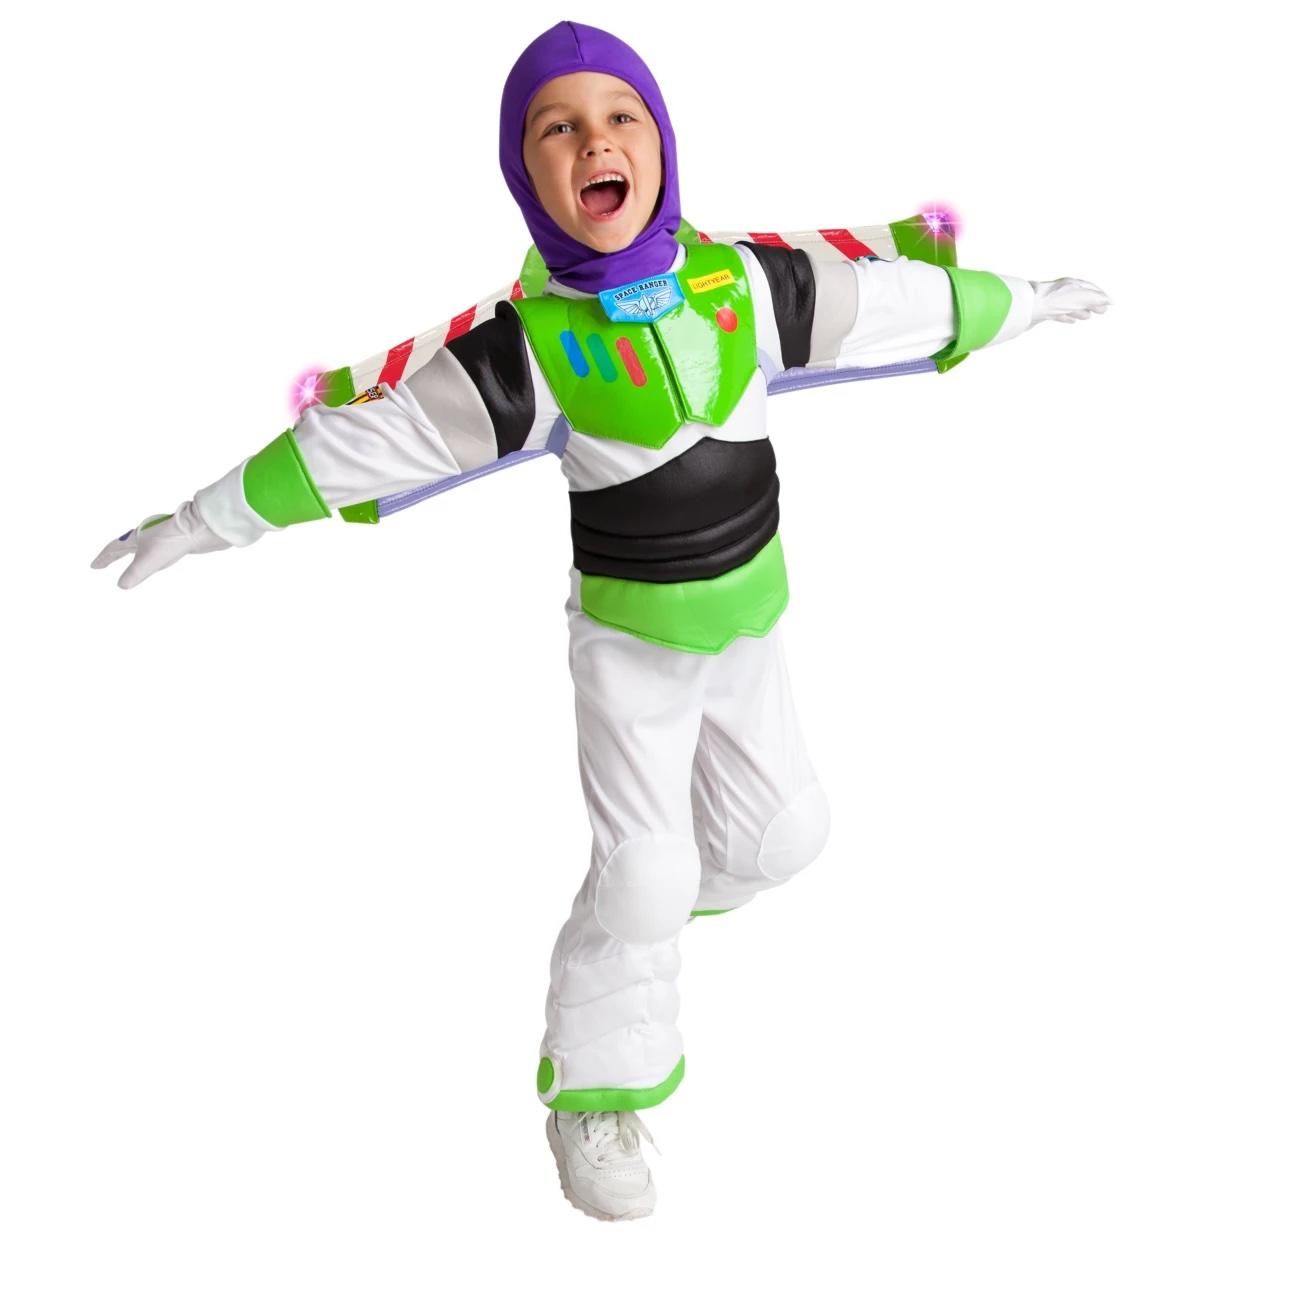 Buzz Lightyear Halloween costume